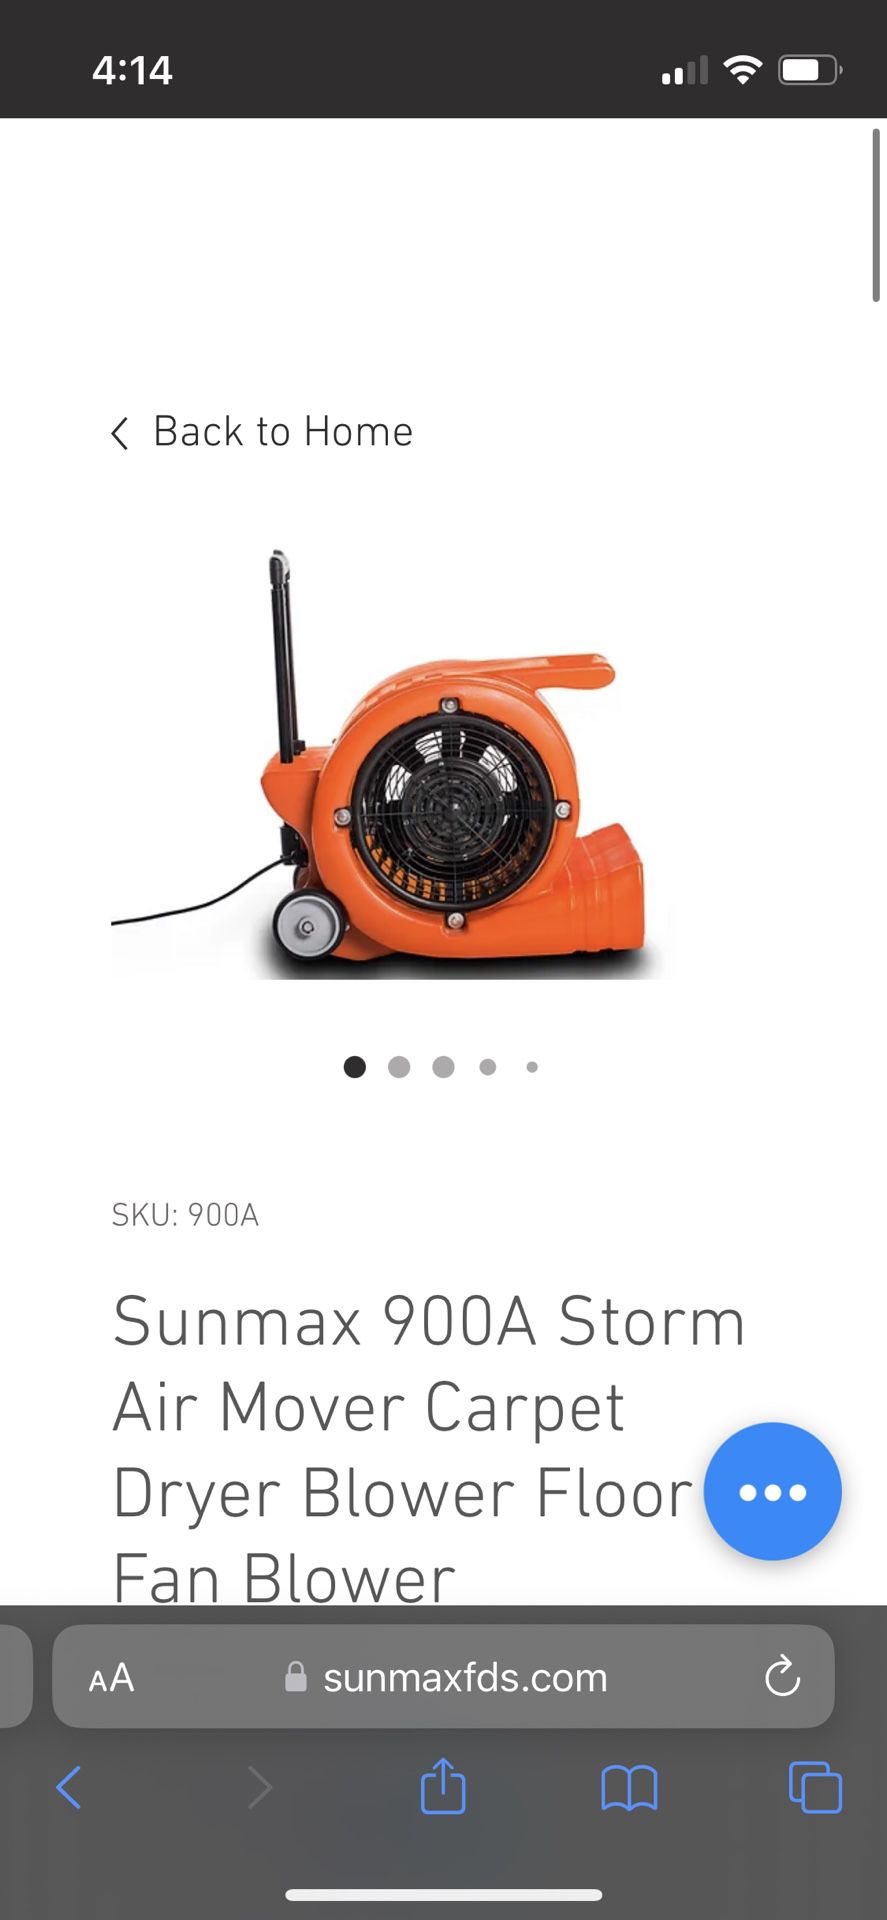 Sunmax 900A Storm Air Mover Carpet Dryer Blower Floor Fan Blower